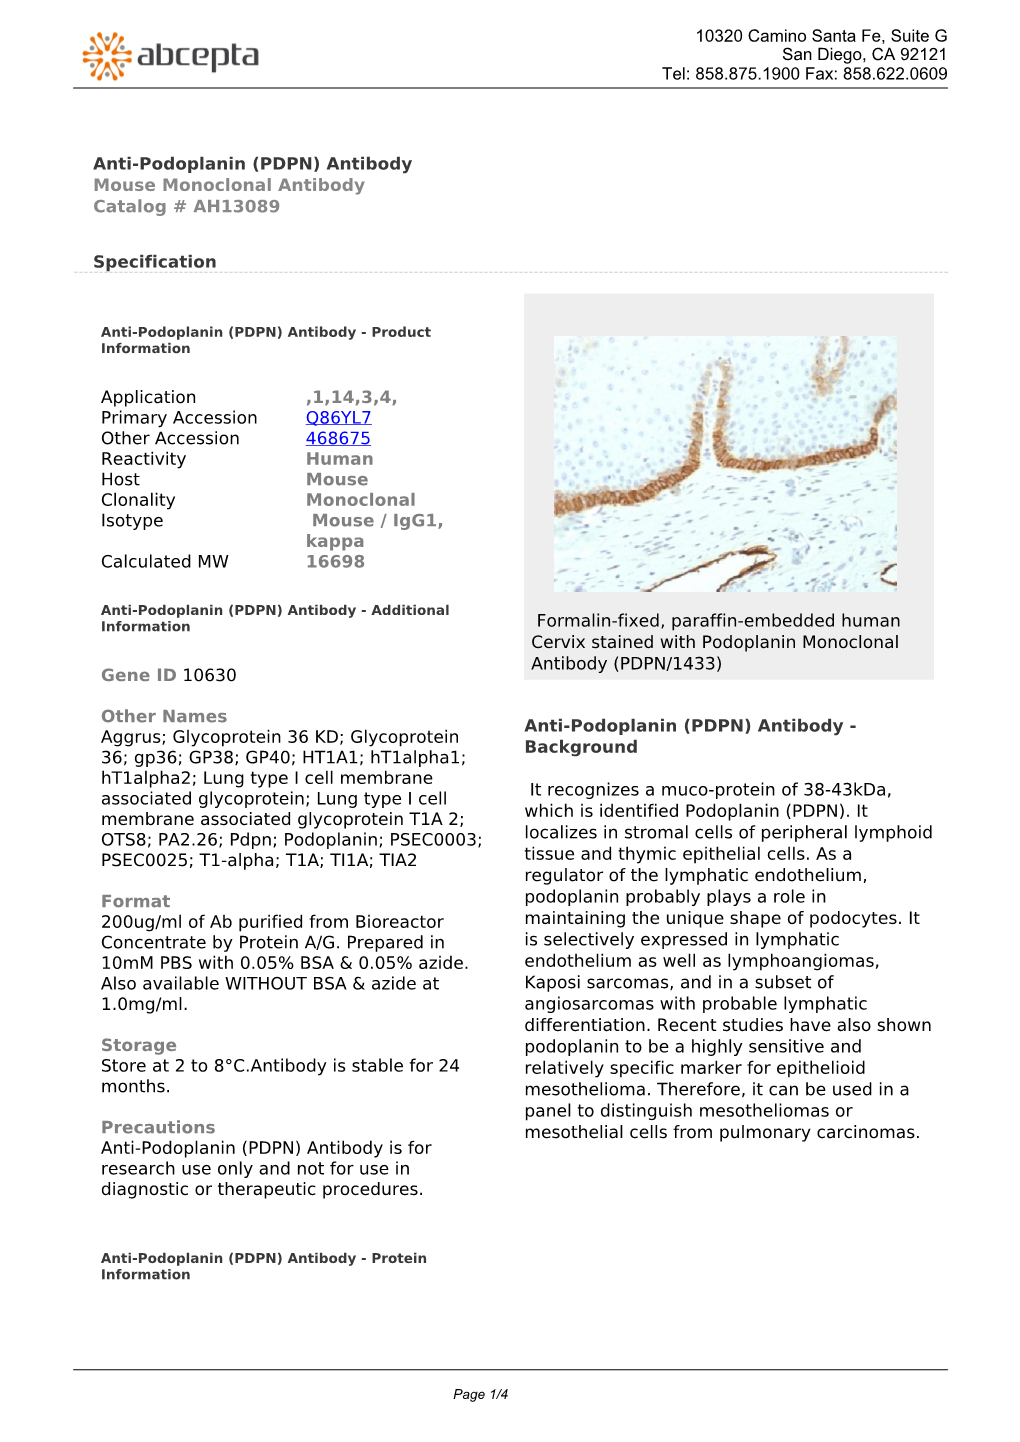 Anti-Podoplanin (PDPN) Antibody Mouse Monoclonal Antibody Catalog # AH13089